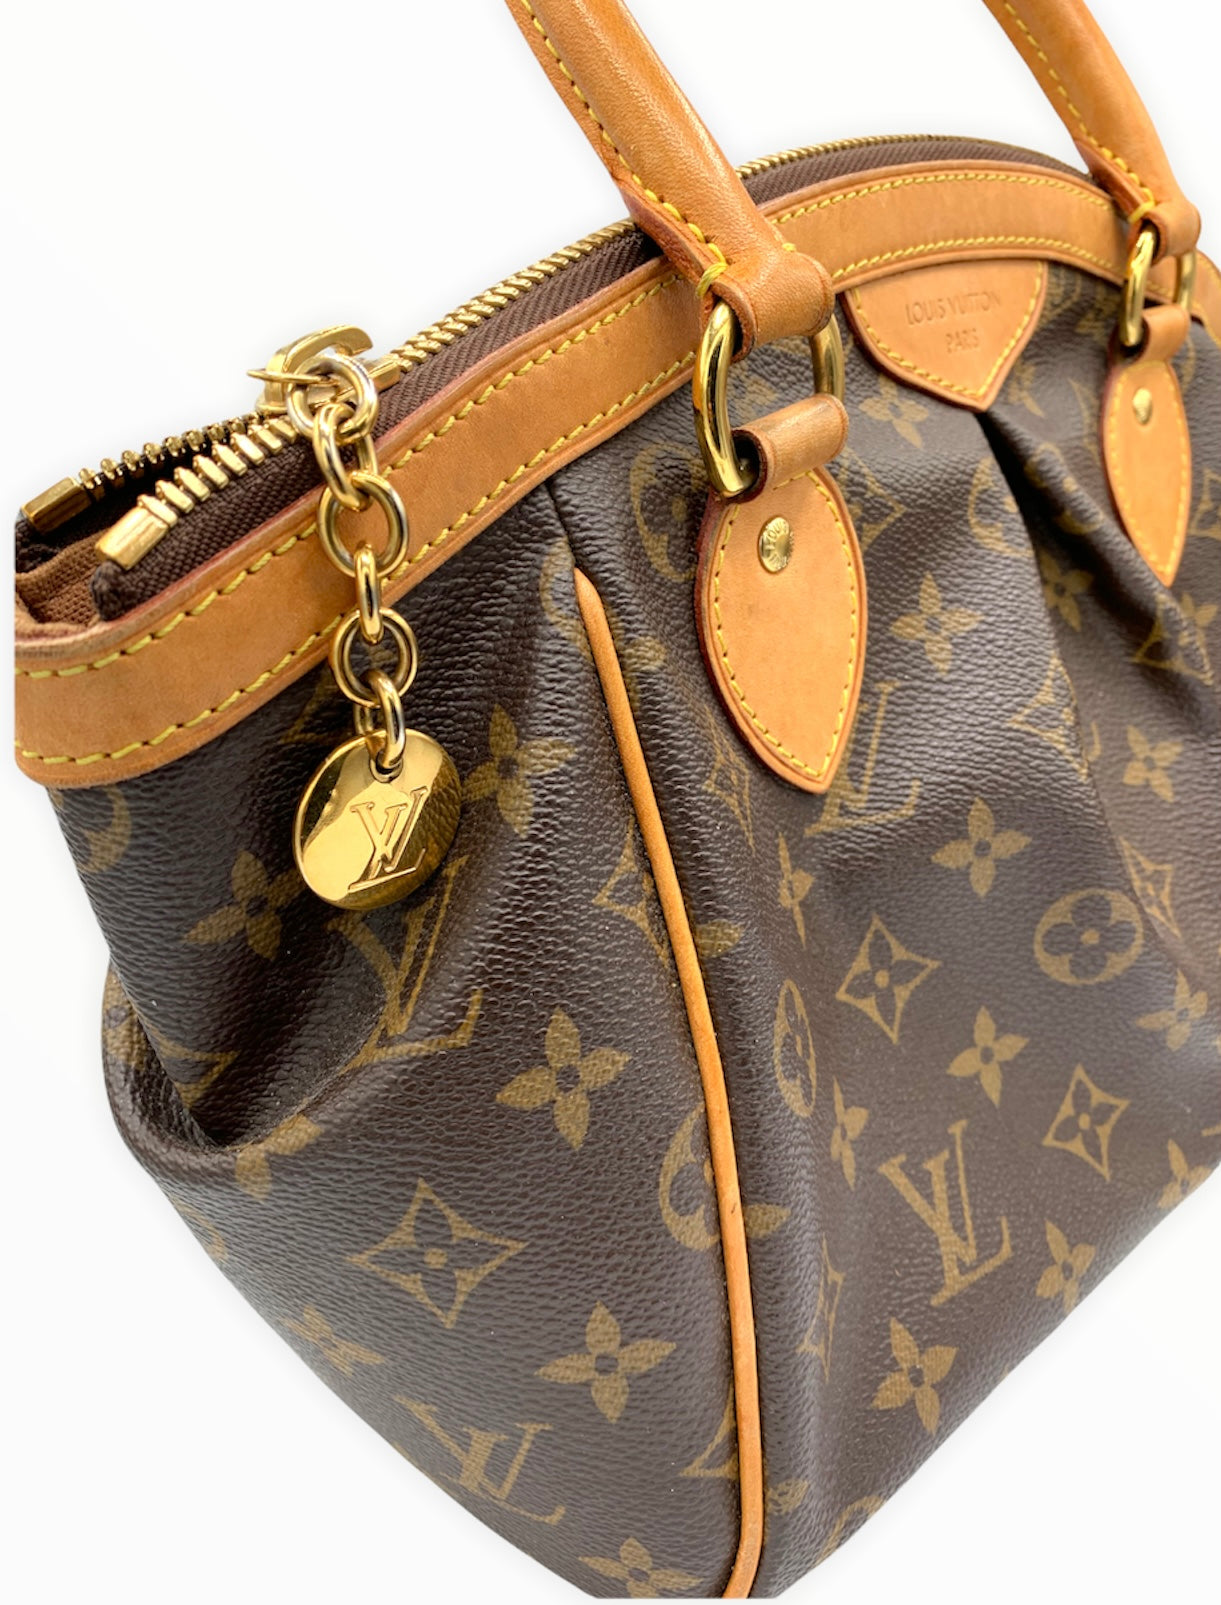 Louis Vuitton Tivoli PM Monogram - clothing & accessories - by owner -  apparel sale - craigslist